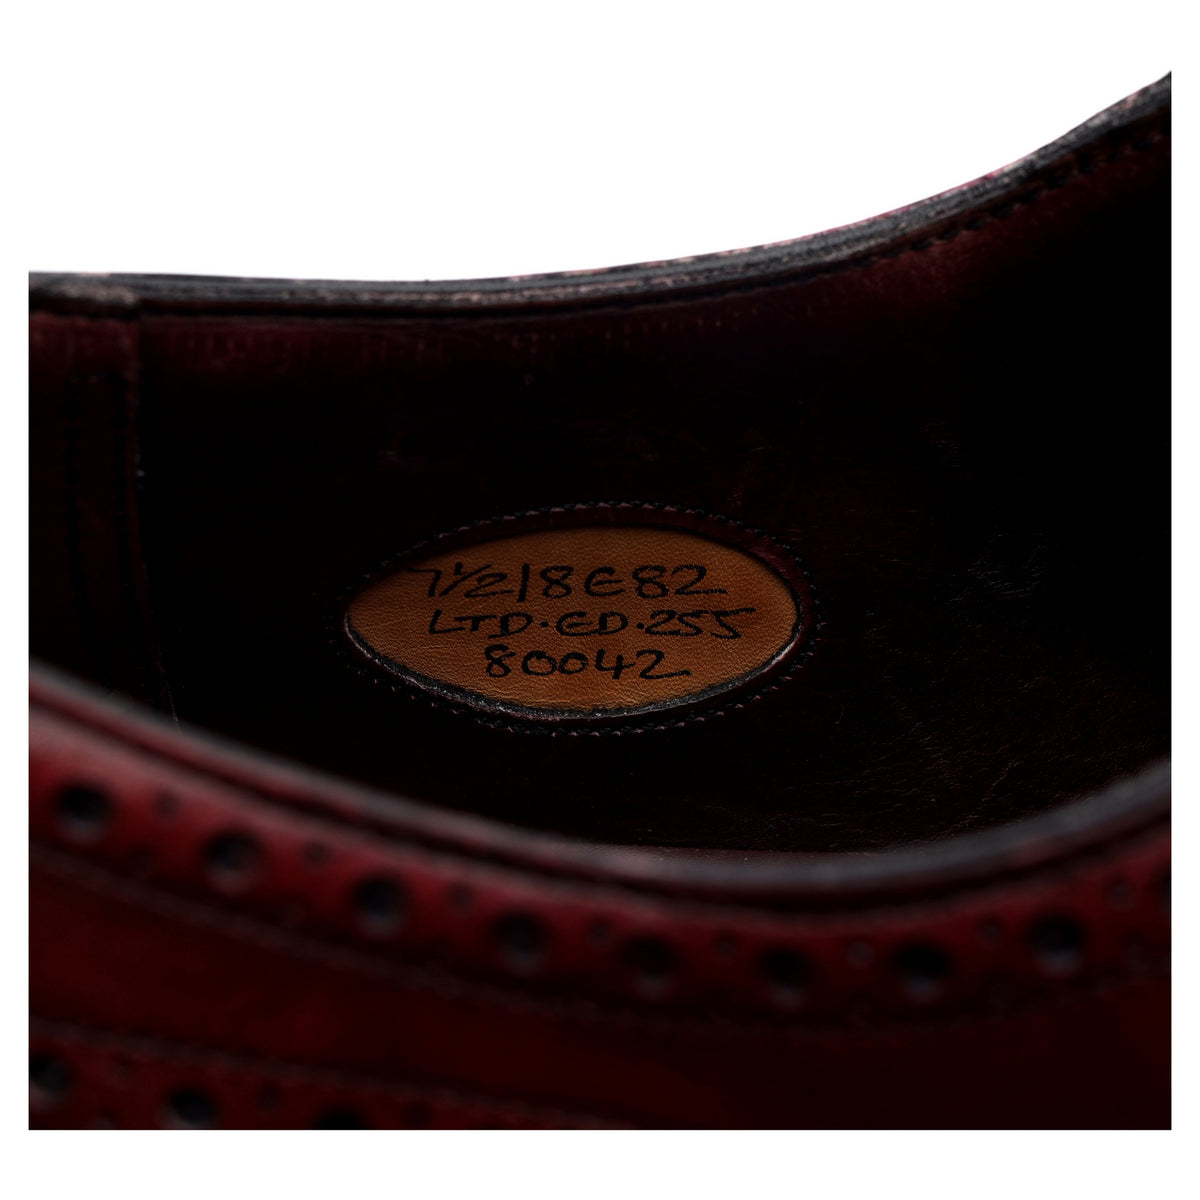 &#39;Brummell&#39; Burgundy Leather Oxford Brogues UK 7.5 E